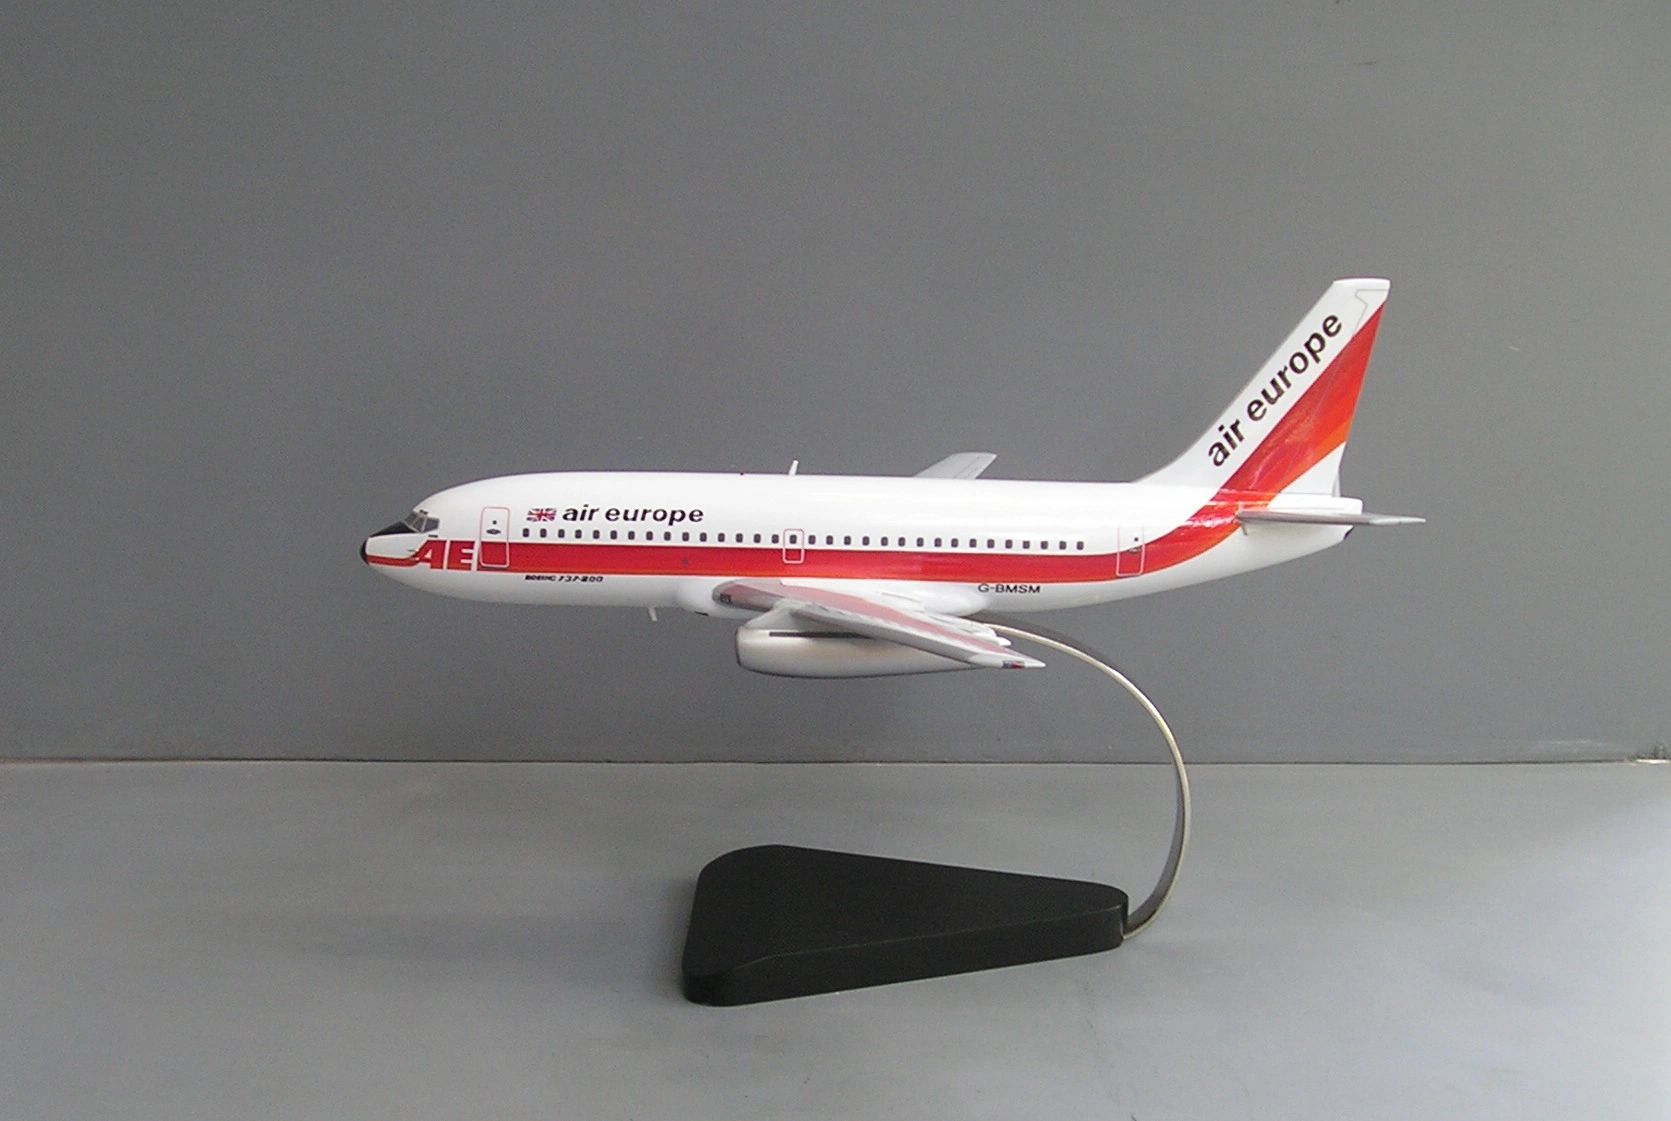 Air Europe custom models